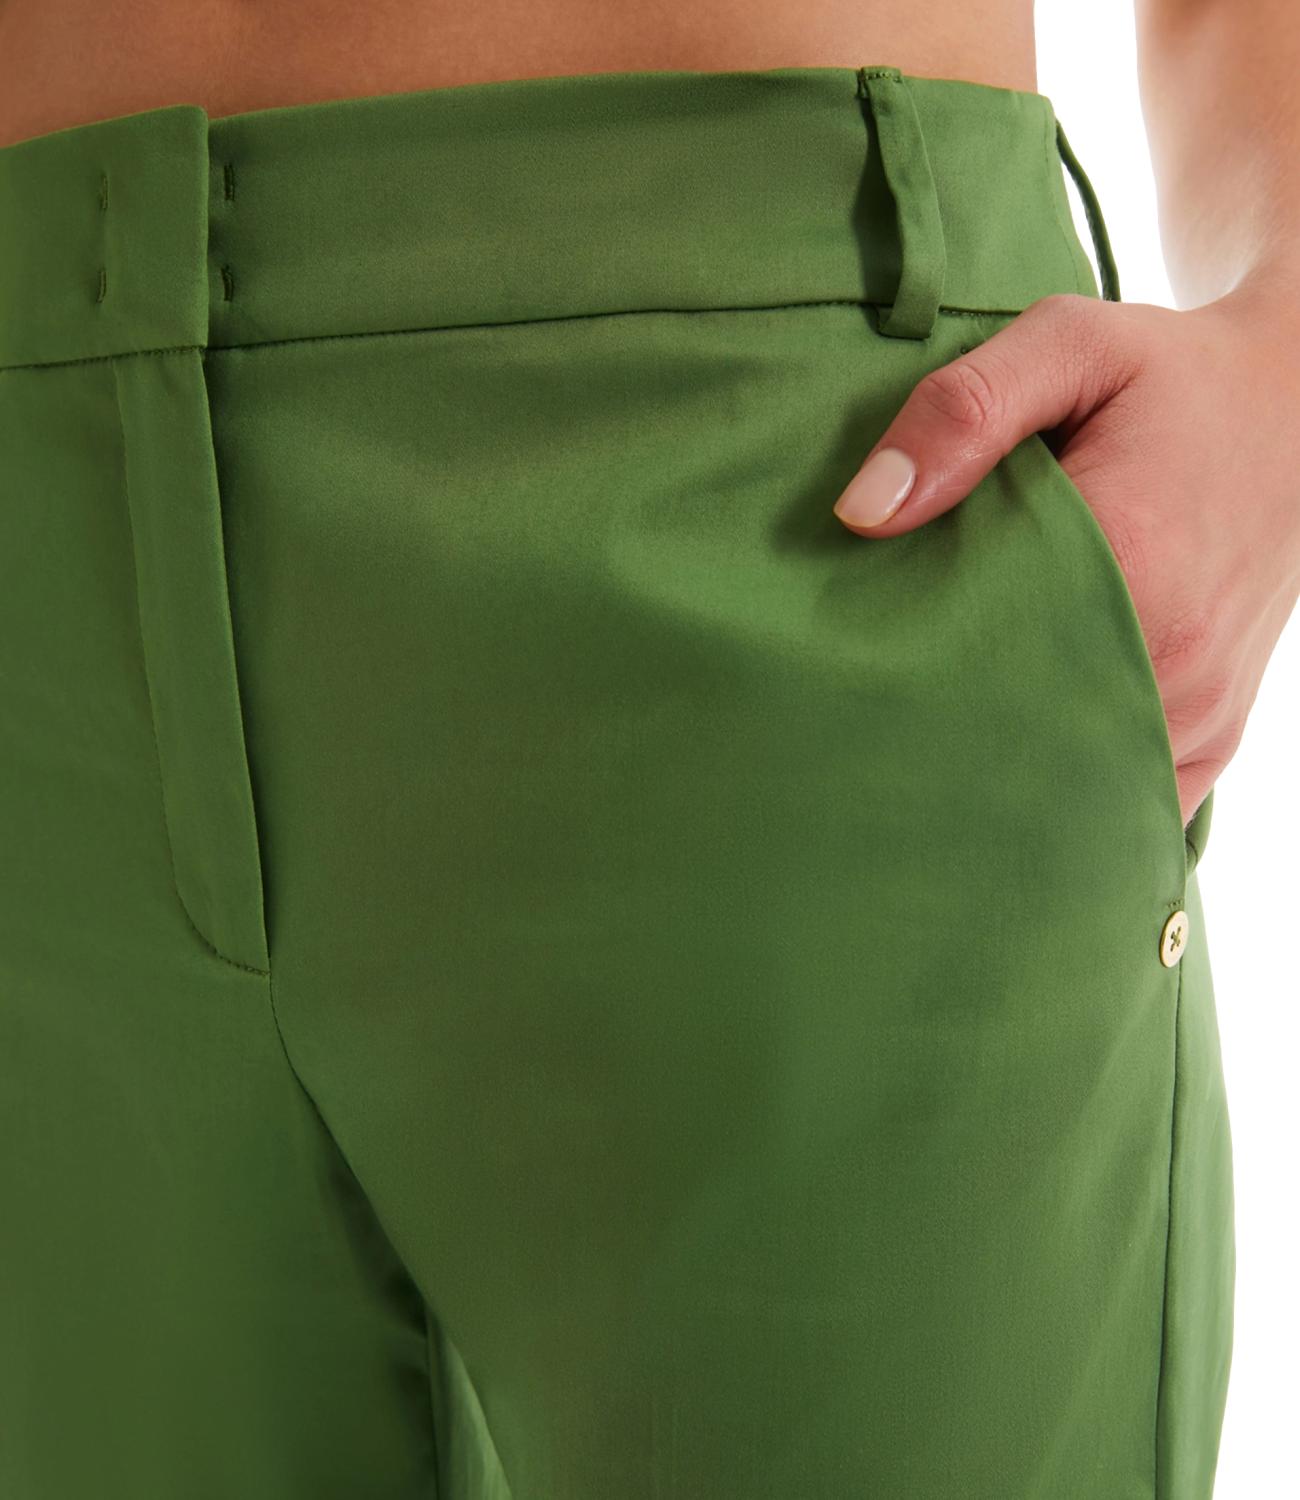 Pantalone BELBO verde donna